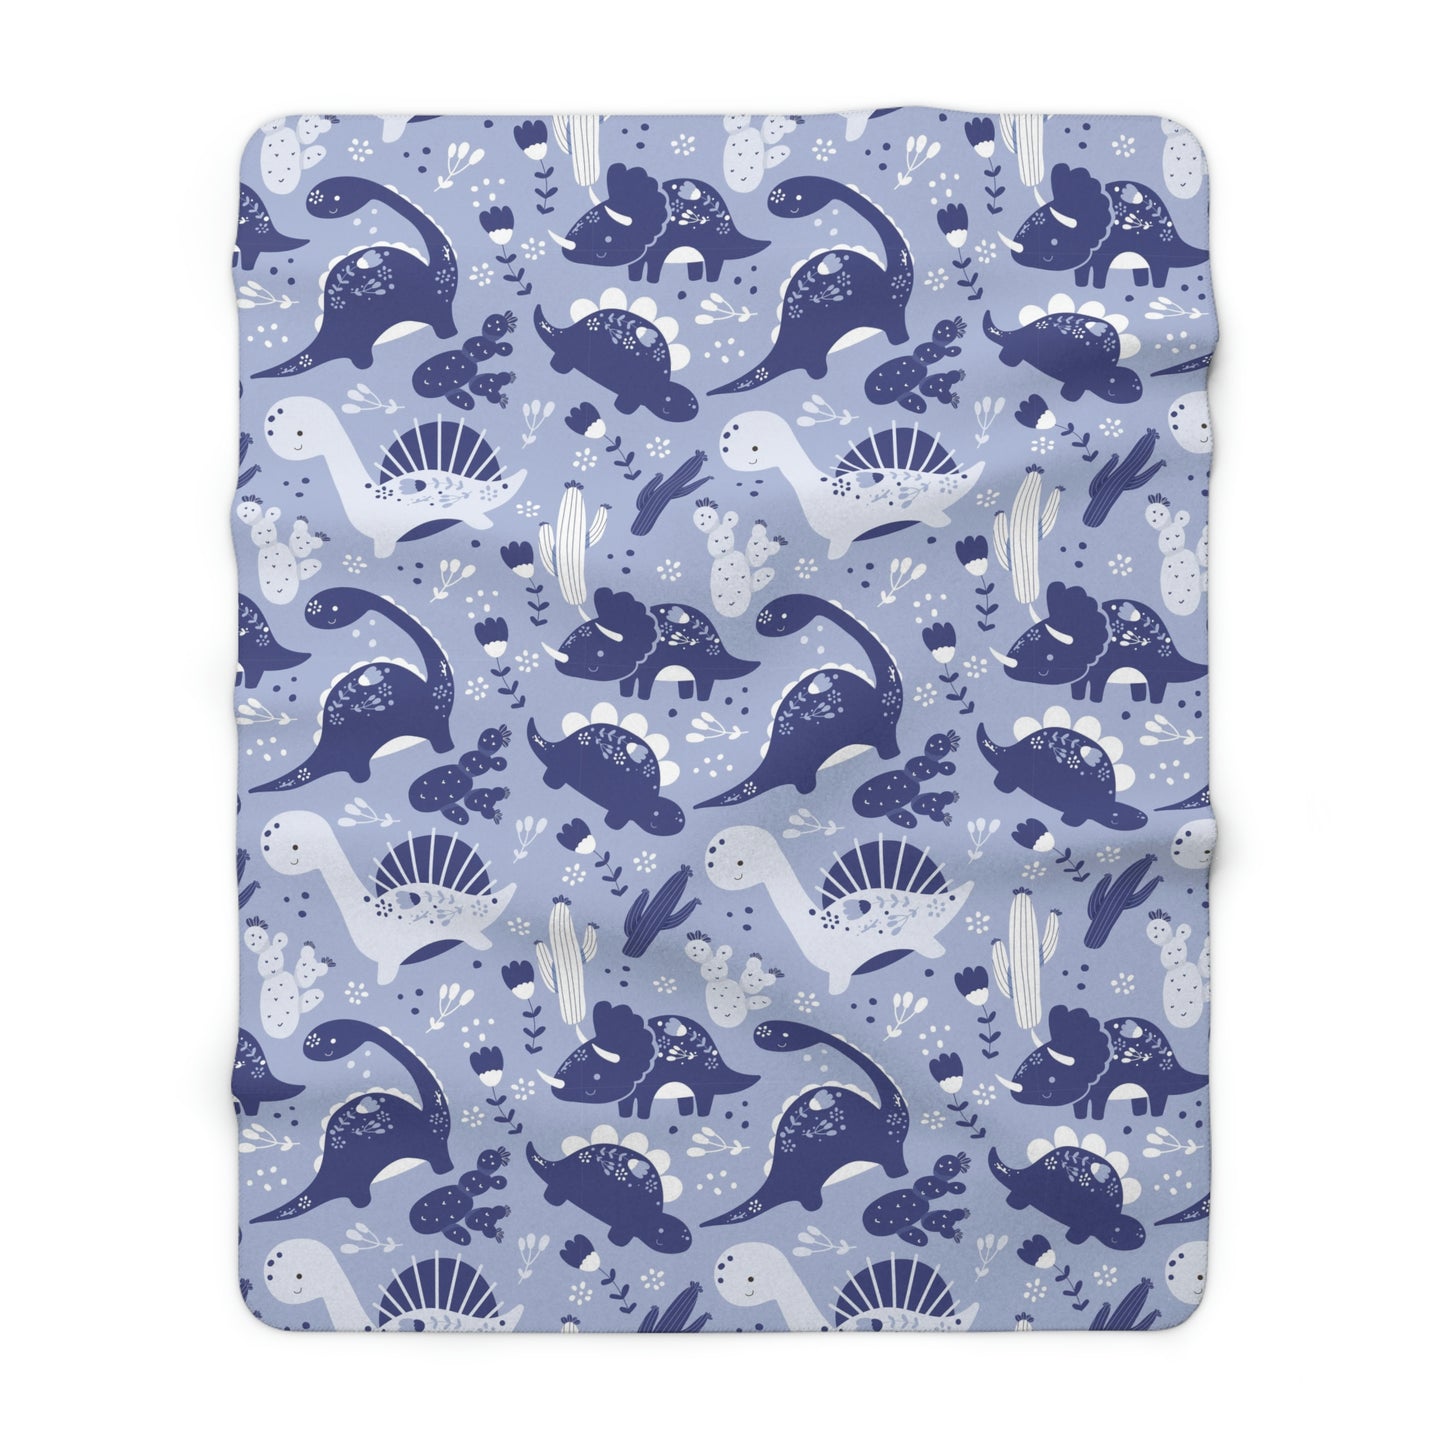 blue dinosaur sherpa blanket, dinosaur pattern sherpa blanket for kids room 